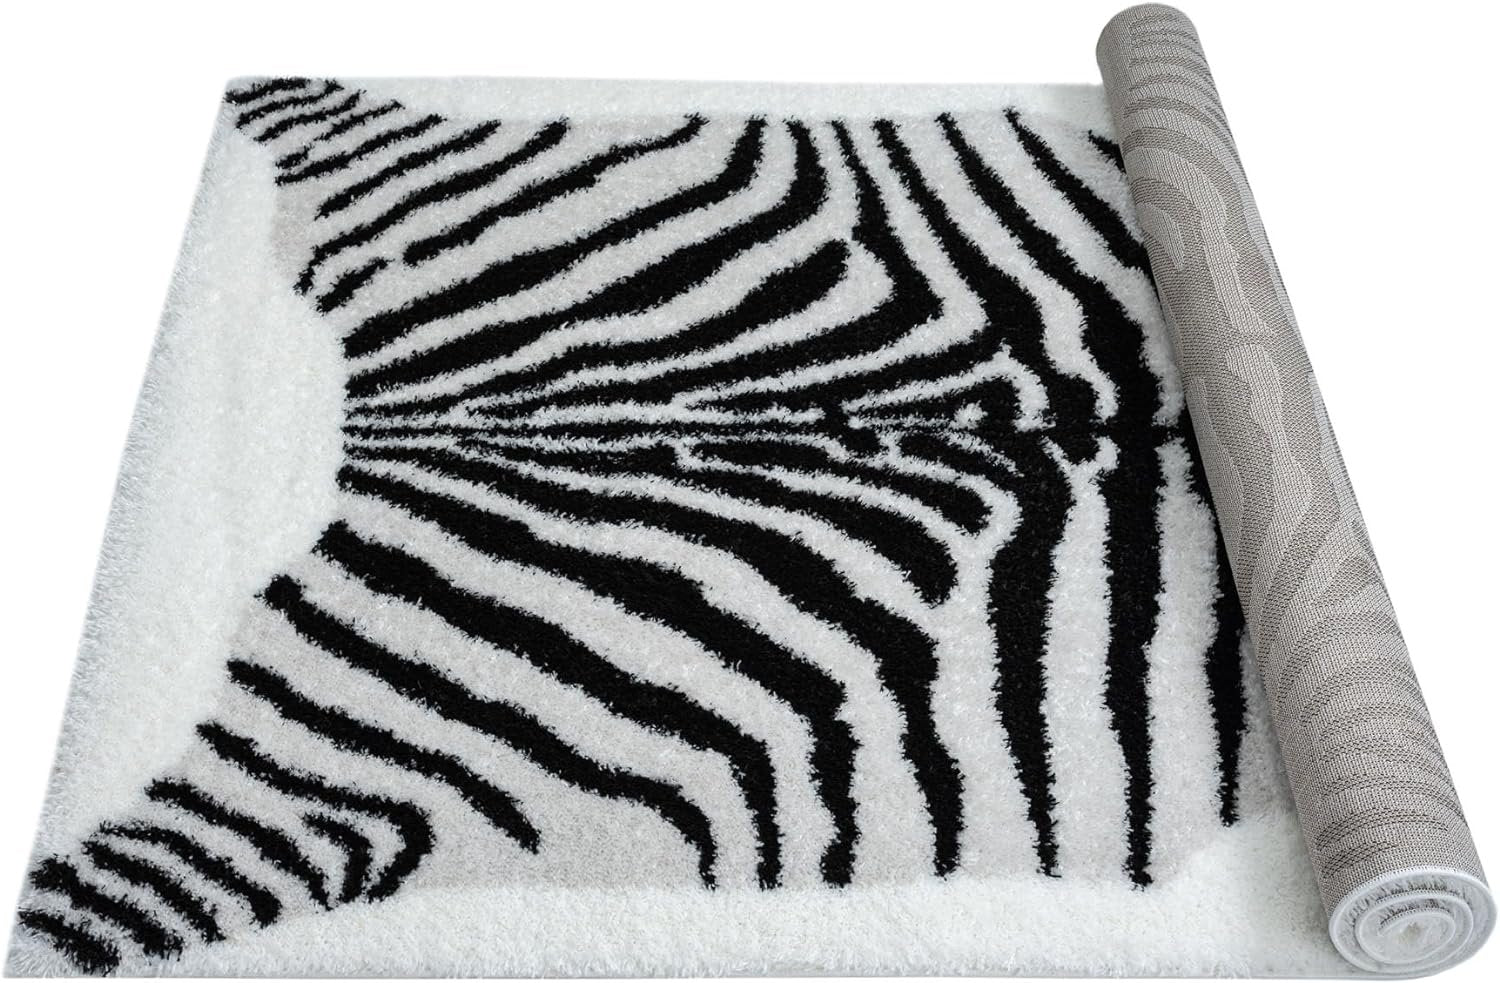 HR Plush Black & White Zebra Pattern Shag Rug - Thick Pile, High-End, Soft & Cozy Floor Carpet #26225